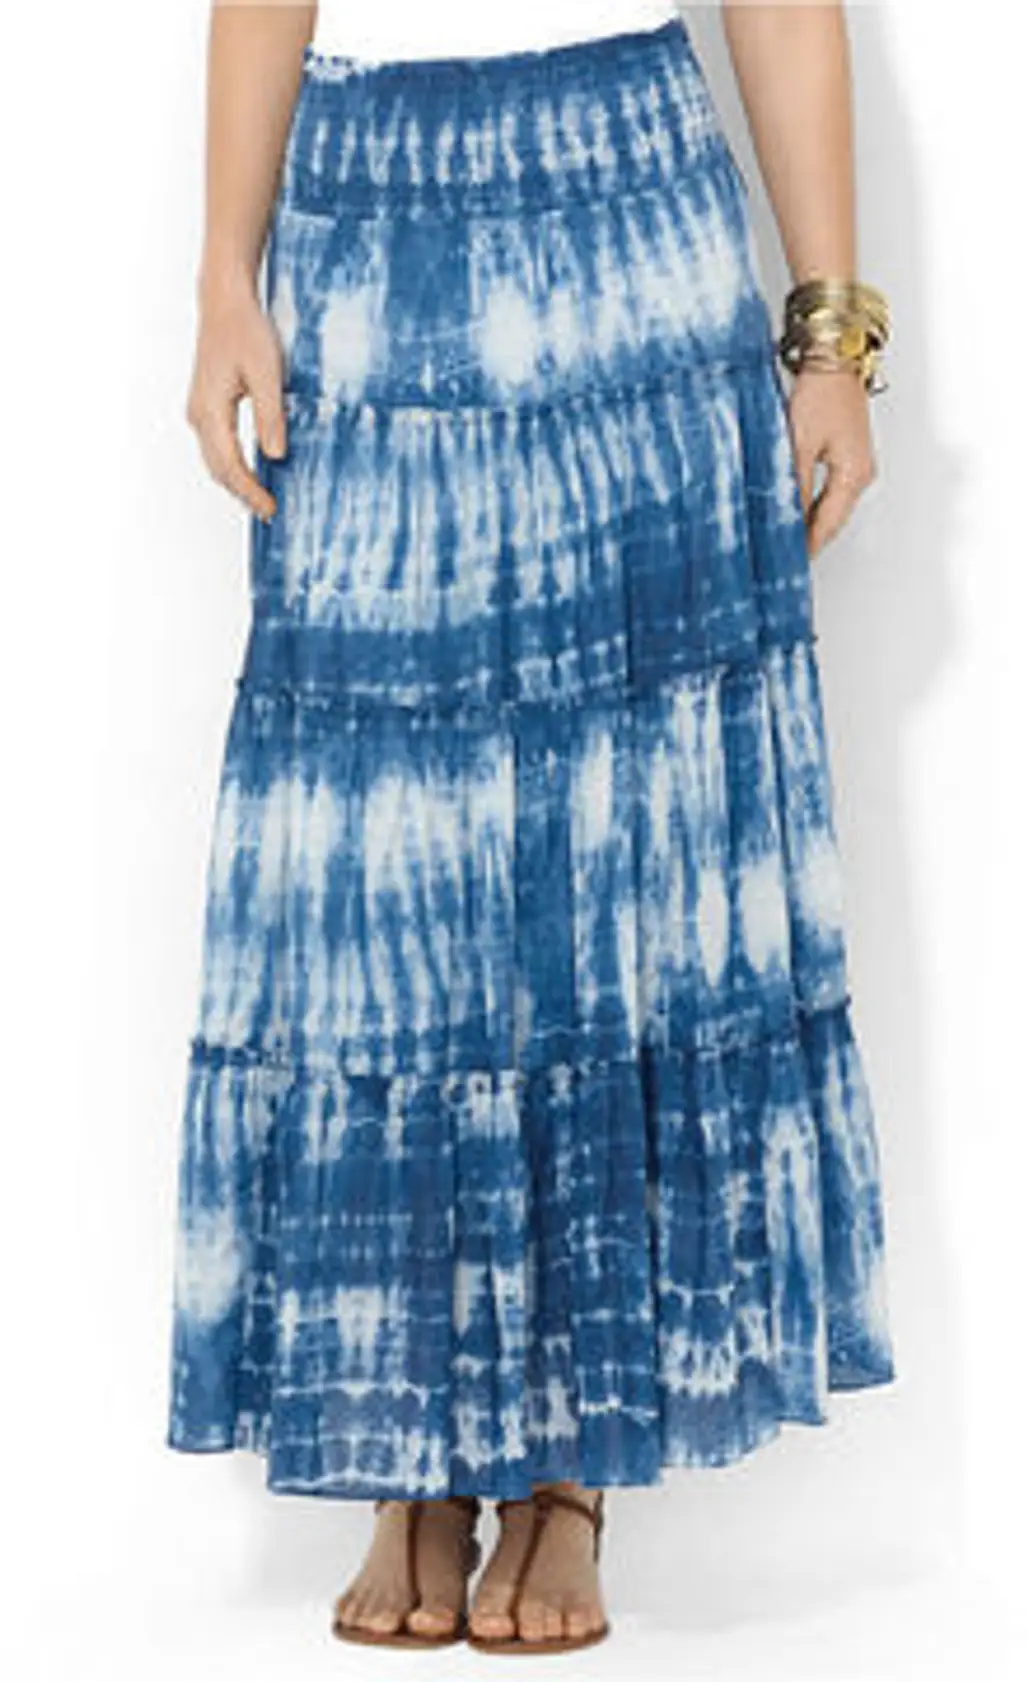 Lauren Jeans Co. Tie-Dye Ruffled Maxi Skirt